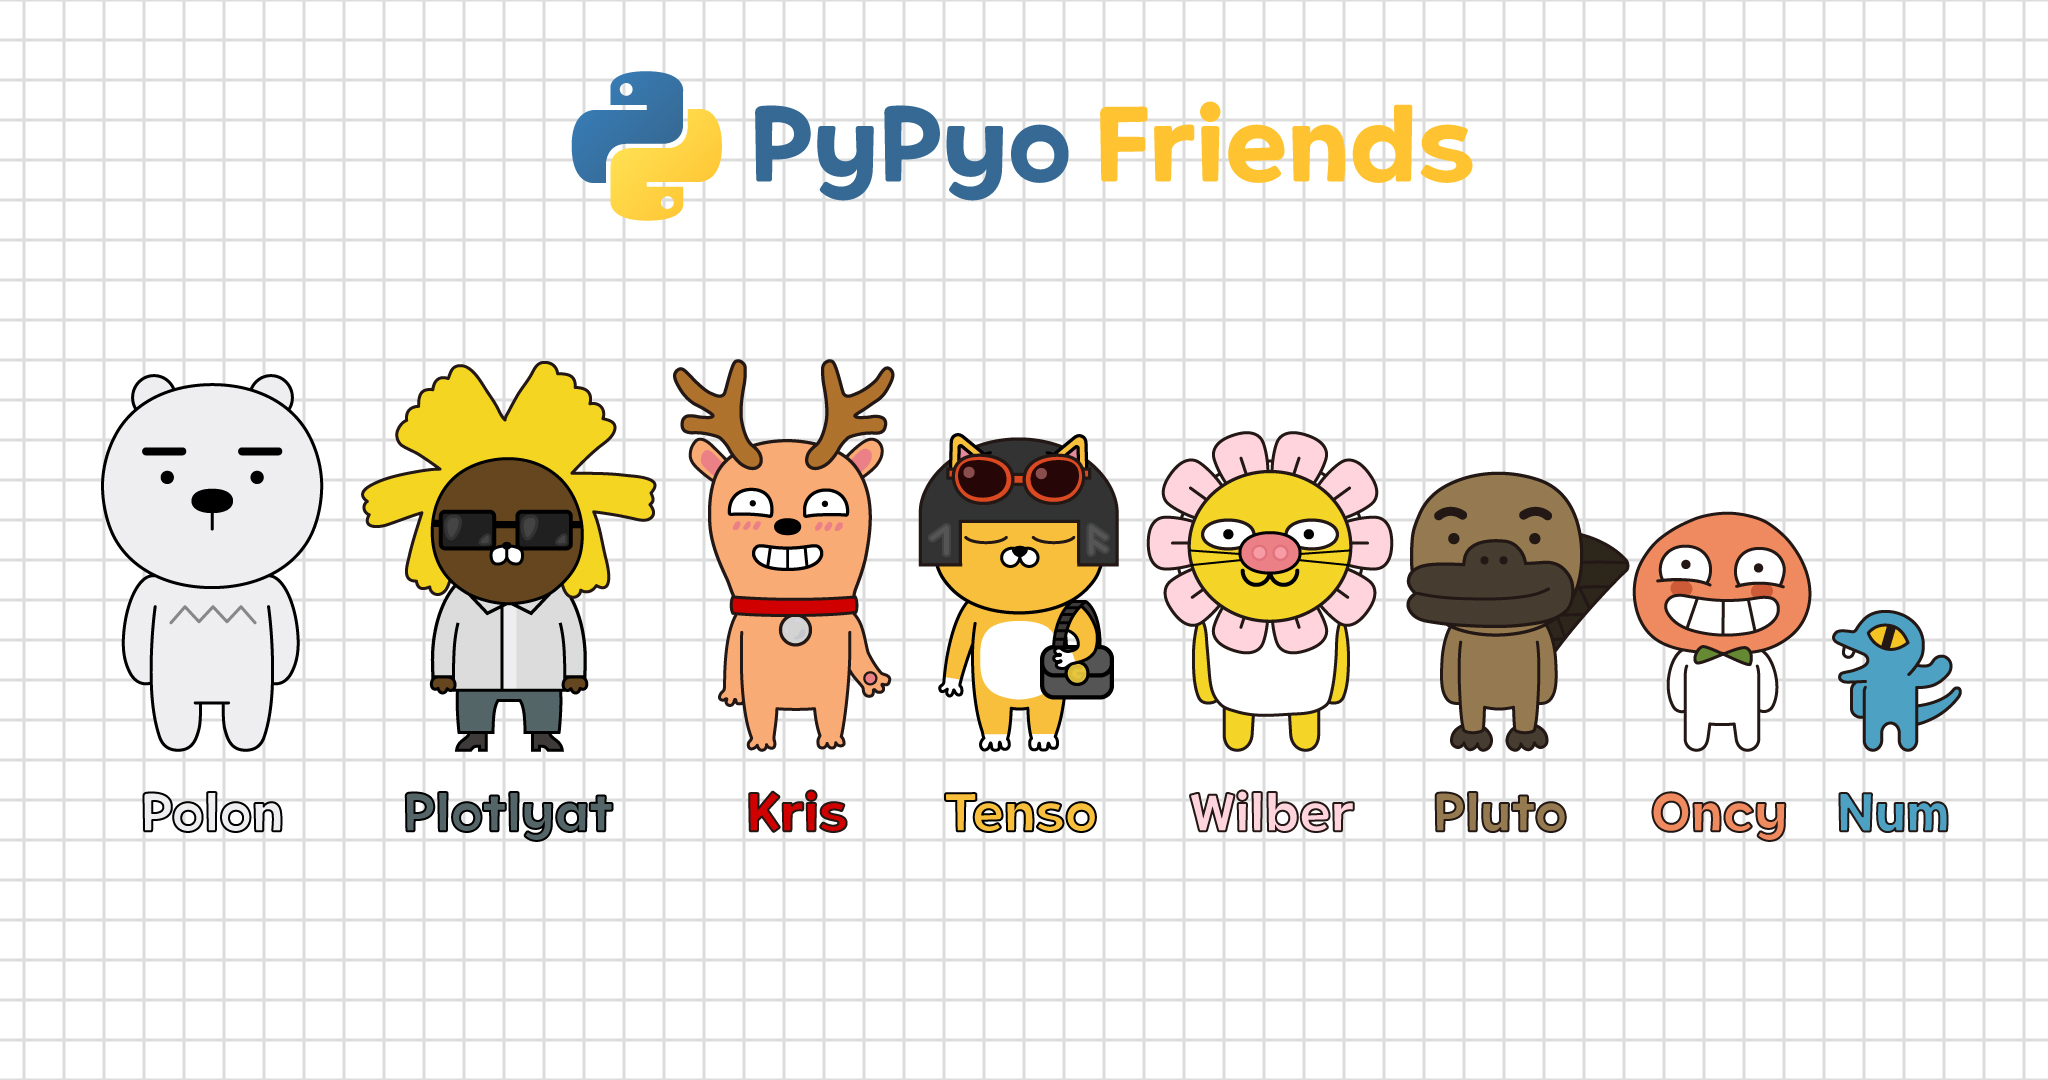 PyPyo Friends (main)